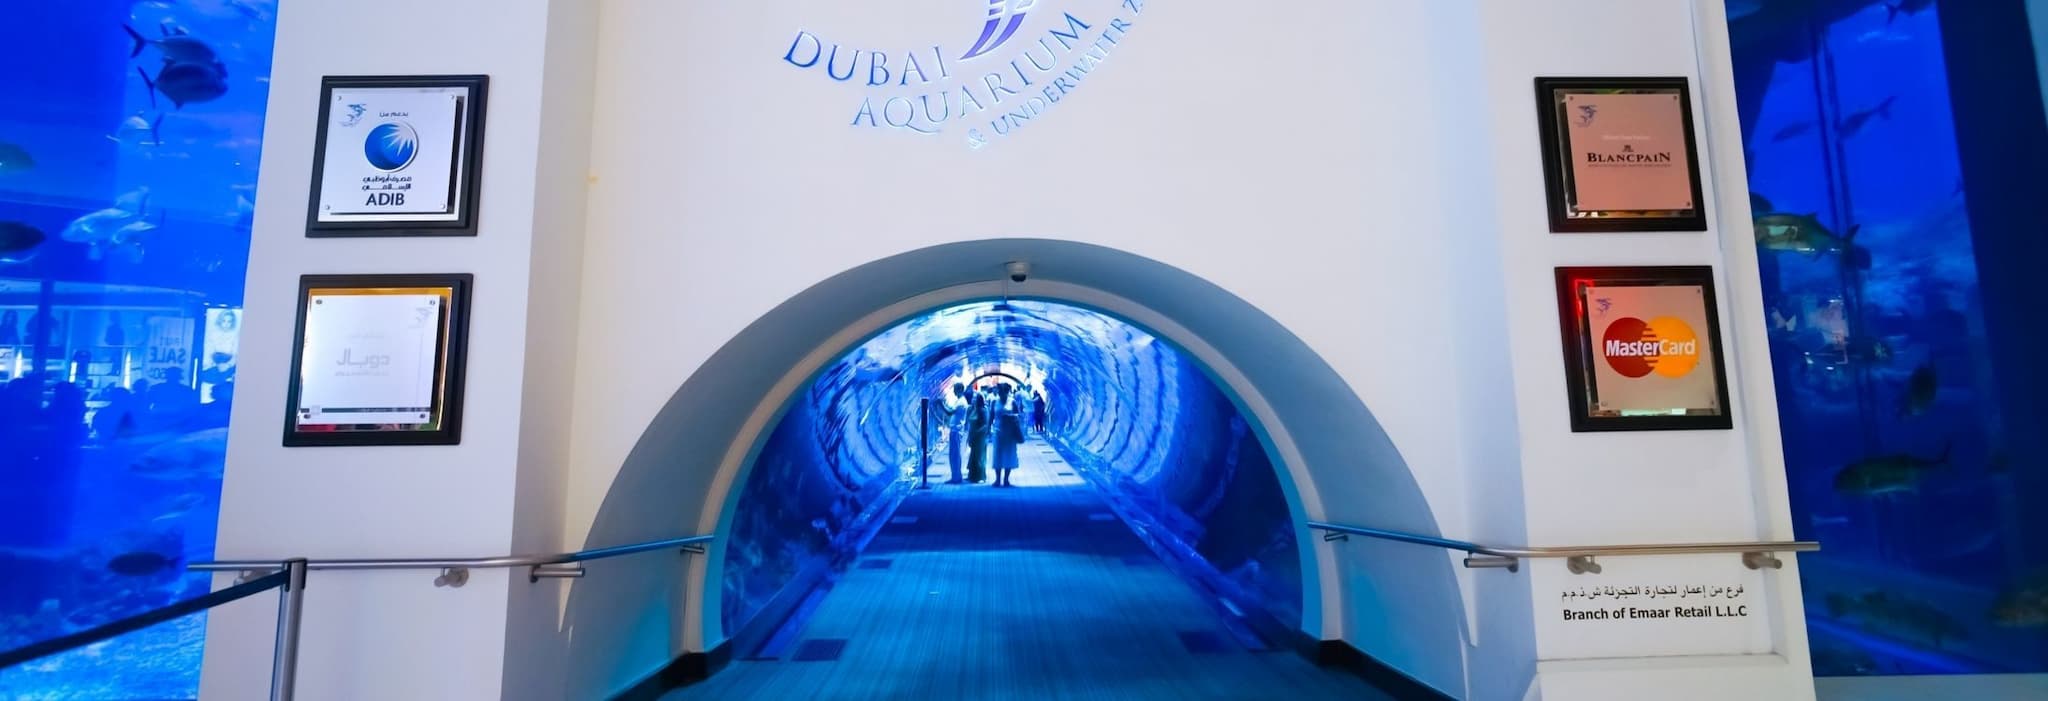 The aquarium acrylic panel holds the Guinness world